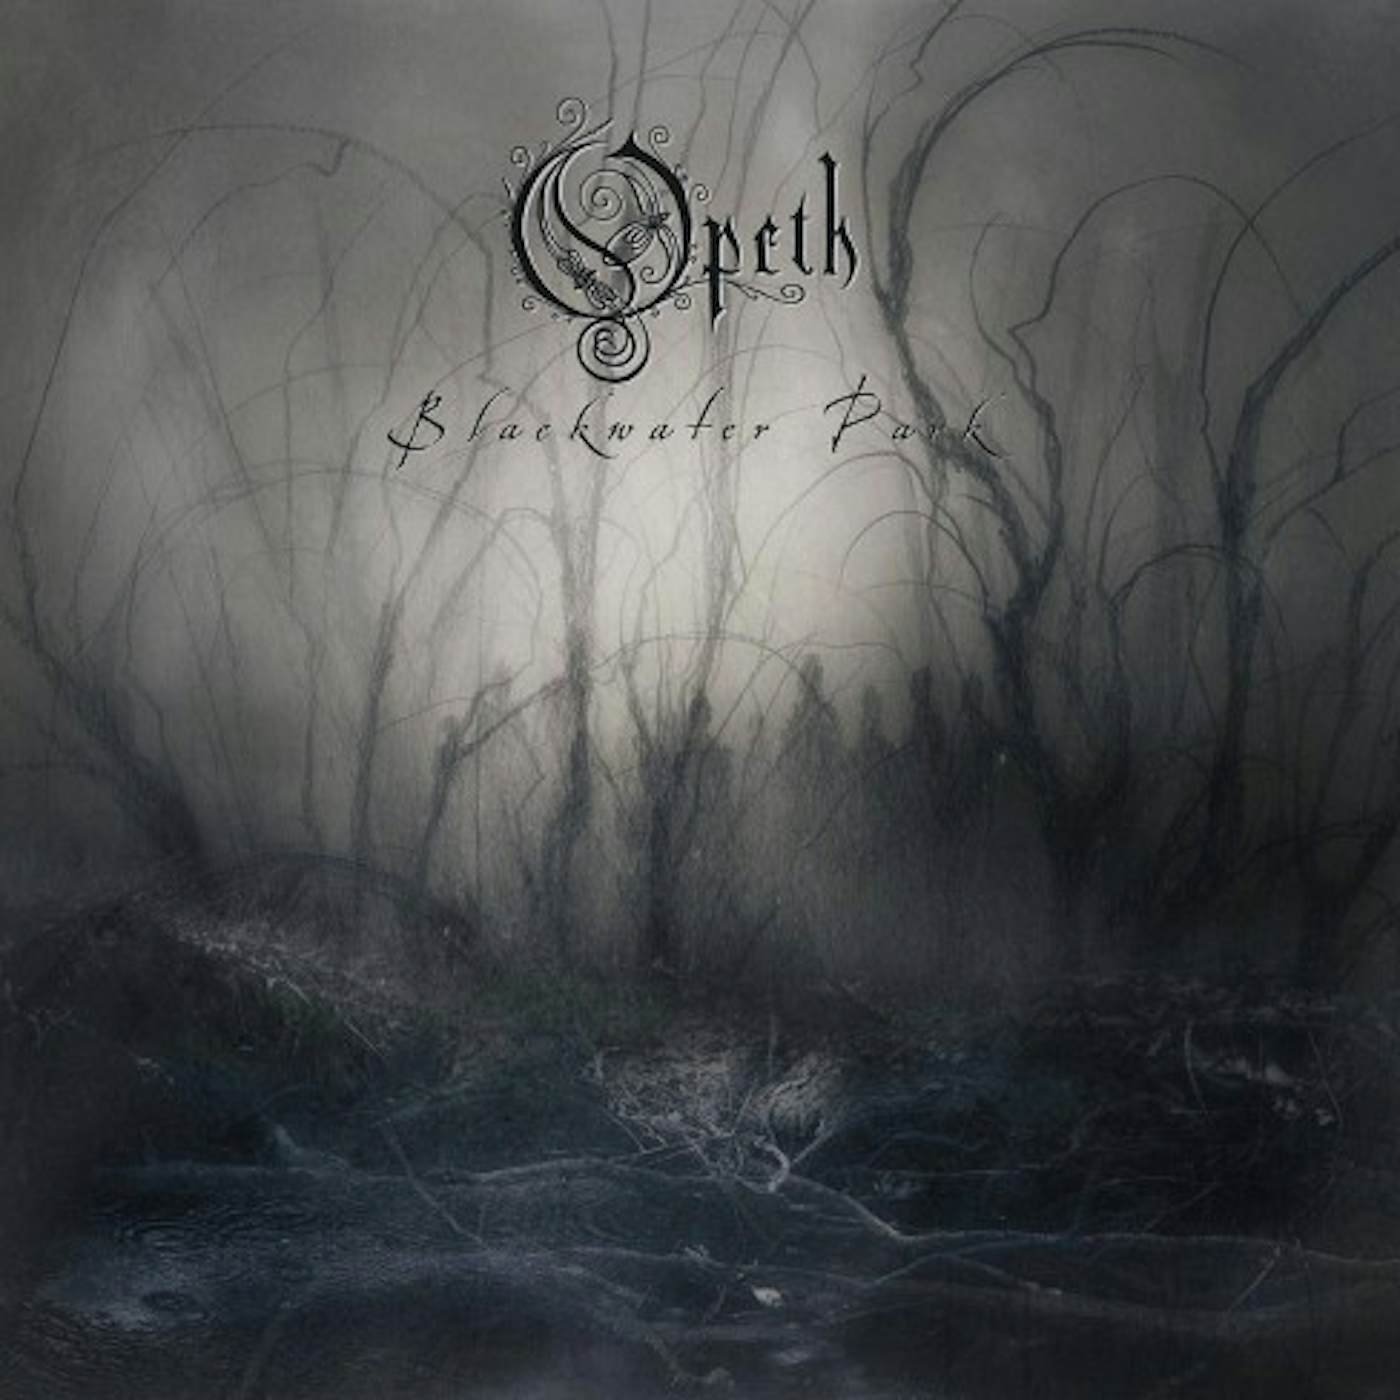 Opeth BLACKWATER PARK: 20TH ANNIVERSARY Vinyl Record